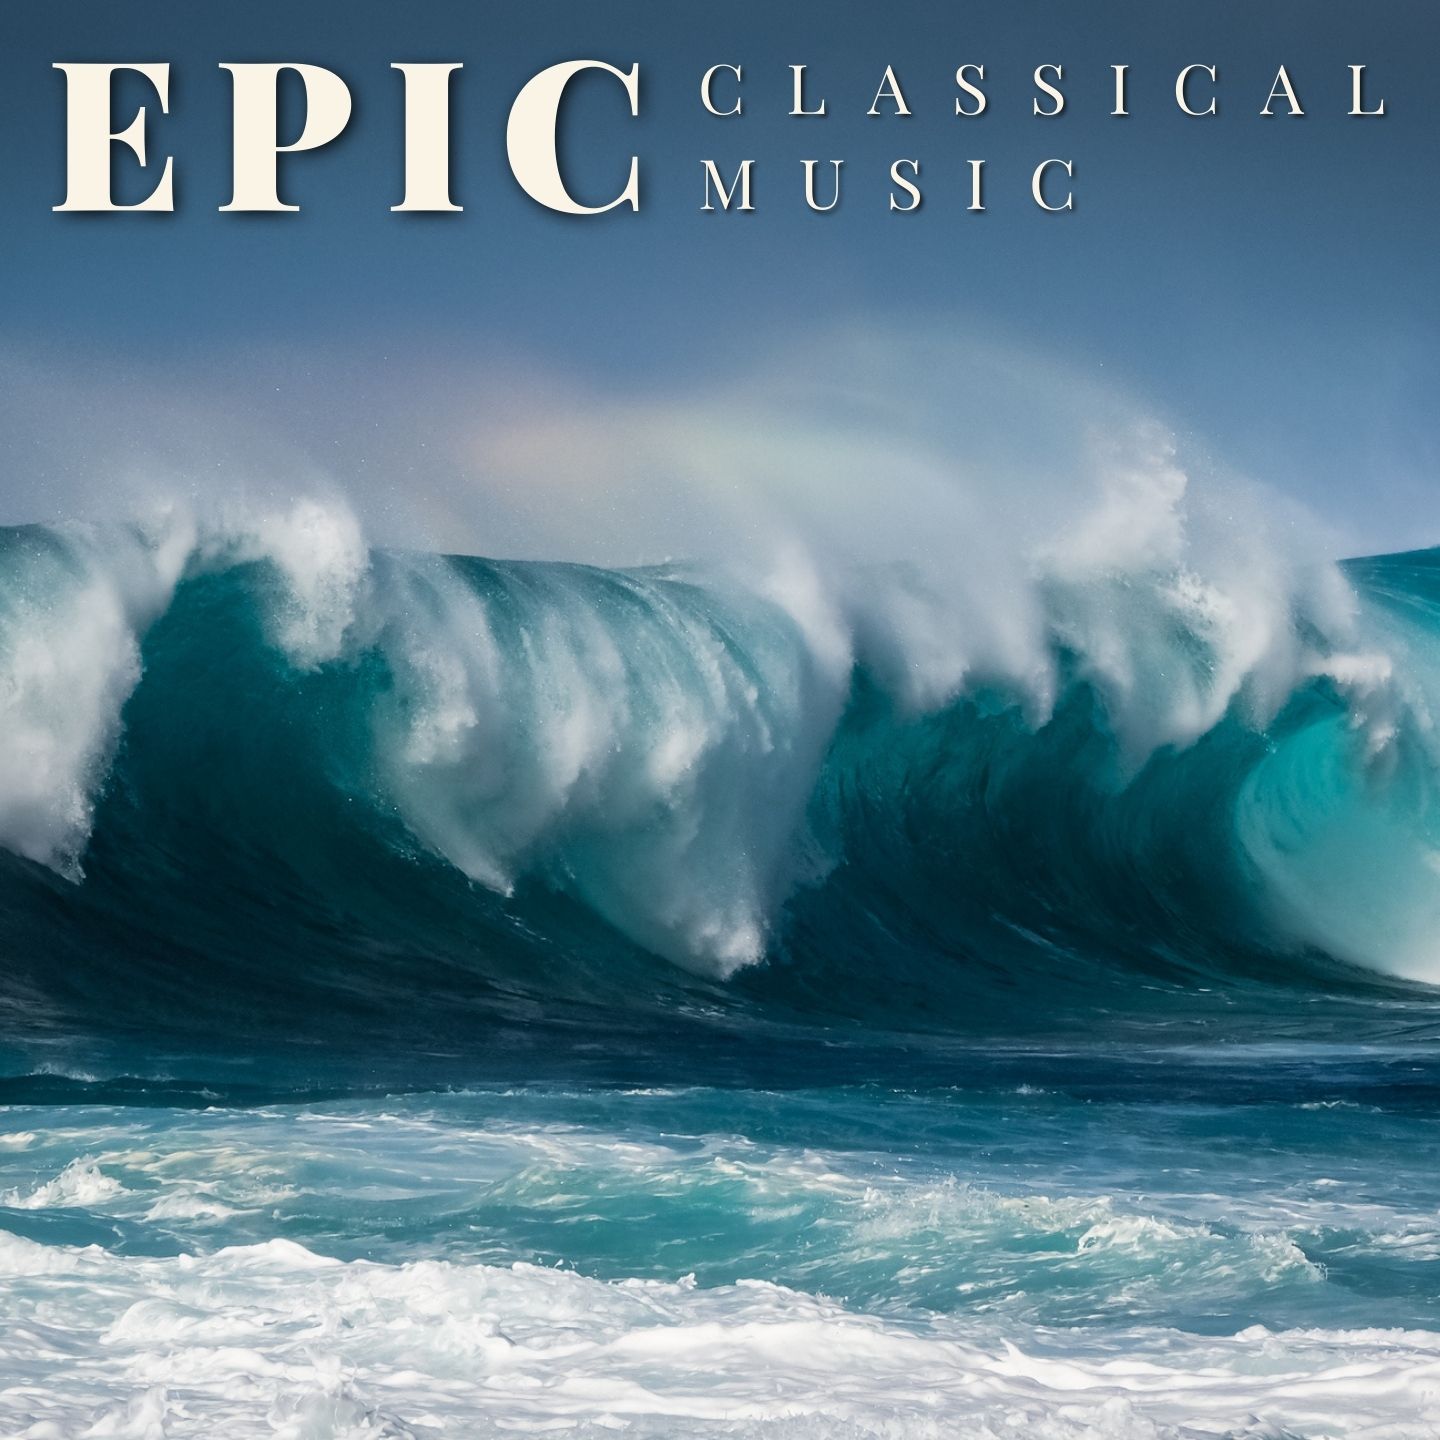 Epic Classical Music